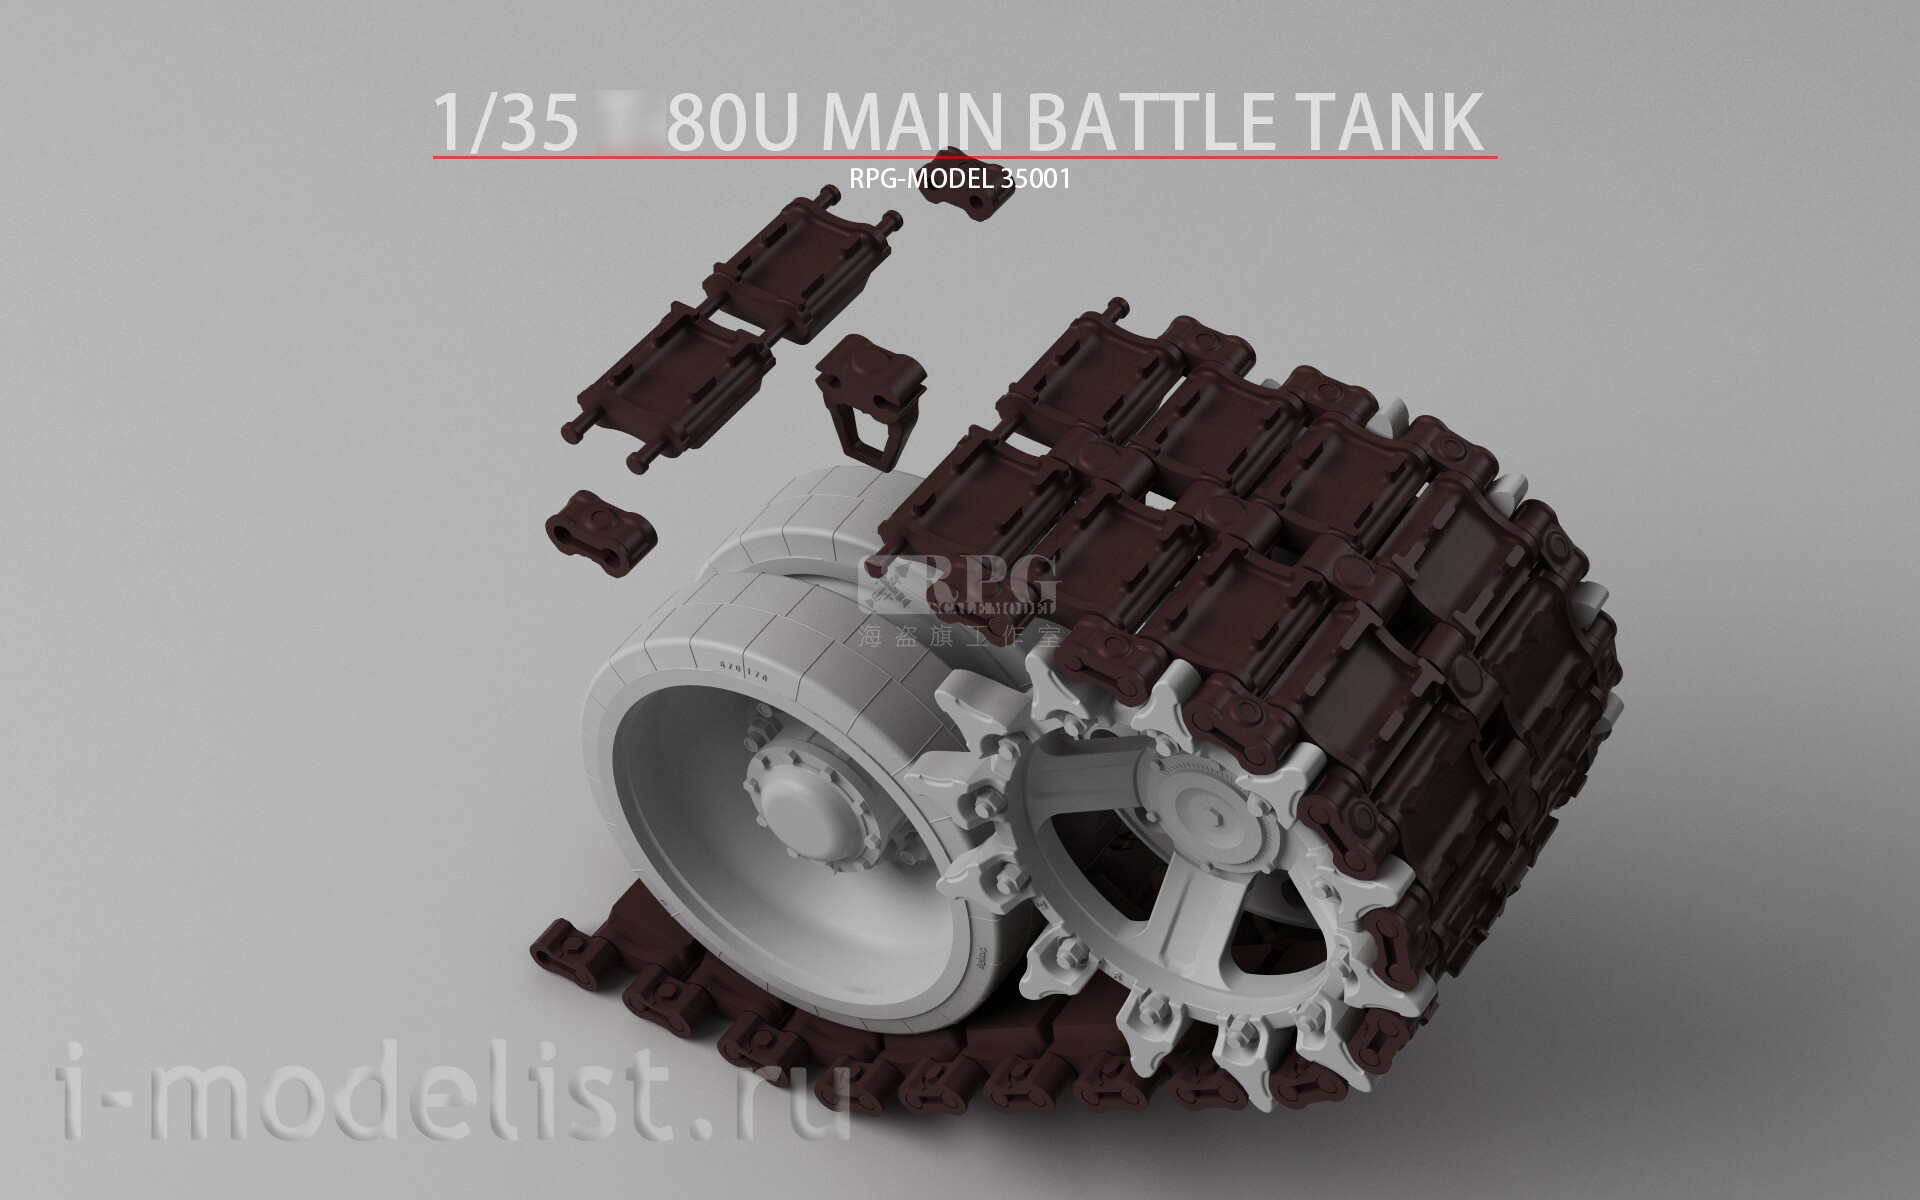 35001 RPG 1/35 Танк тип 80U